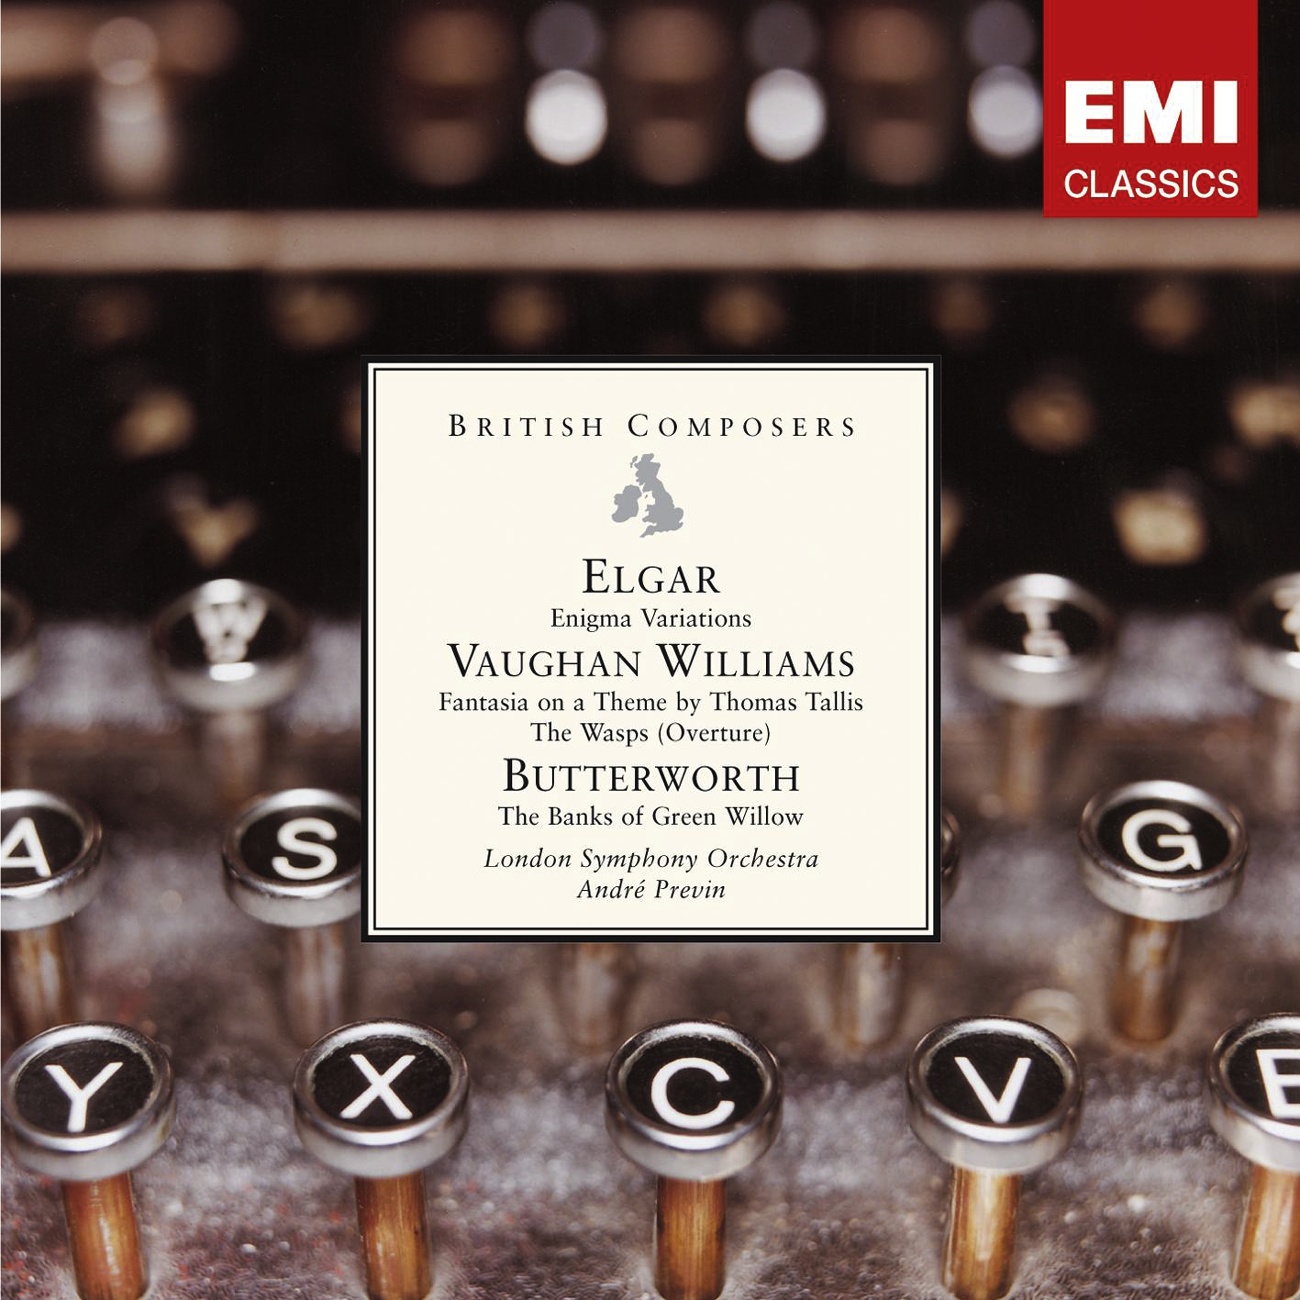 Variations on an Original Theme 'Enigma' Op. 36 (2007 Digital Remaster): X.     Intermezzo: Dorabella (Dora Penny) (Allegretto)